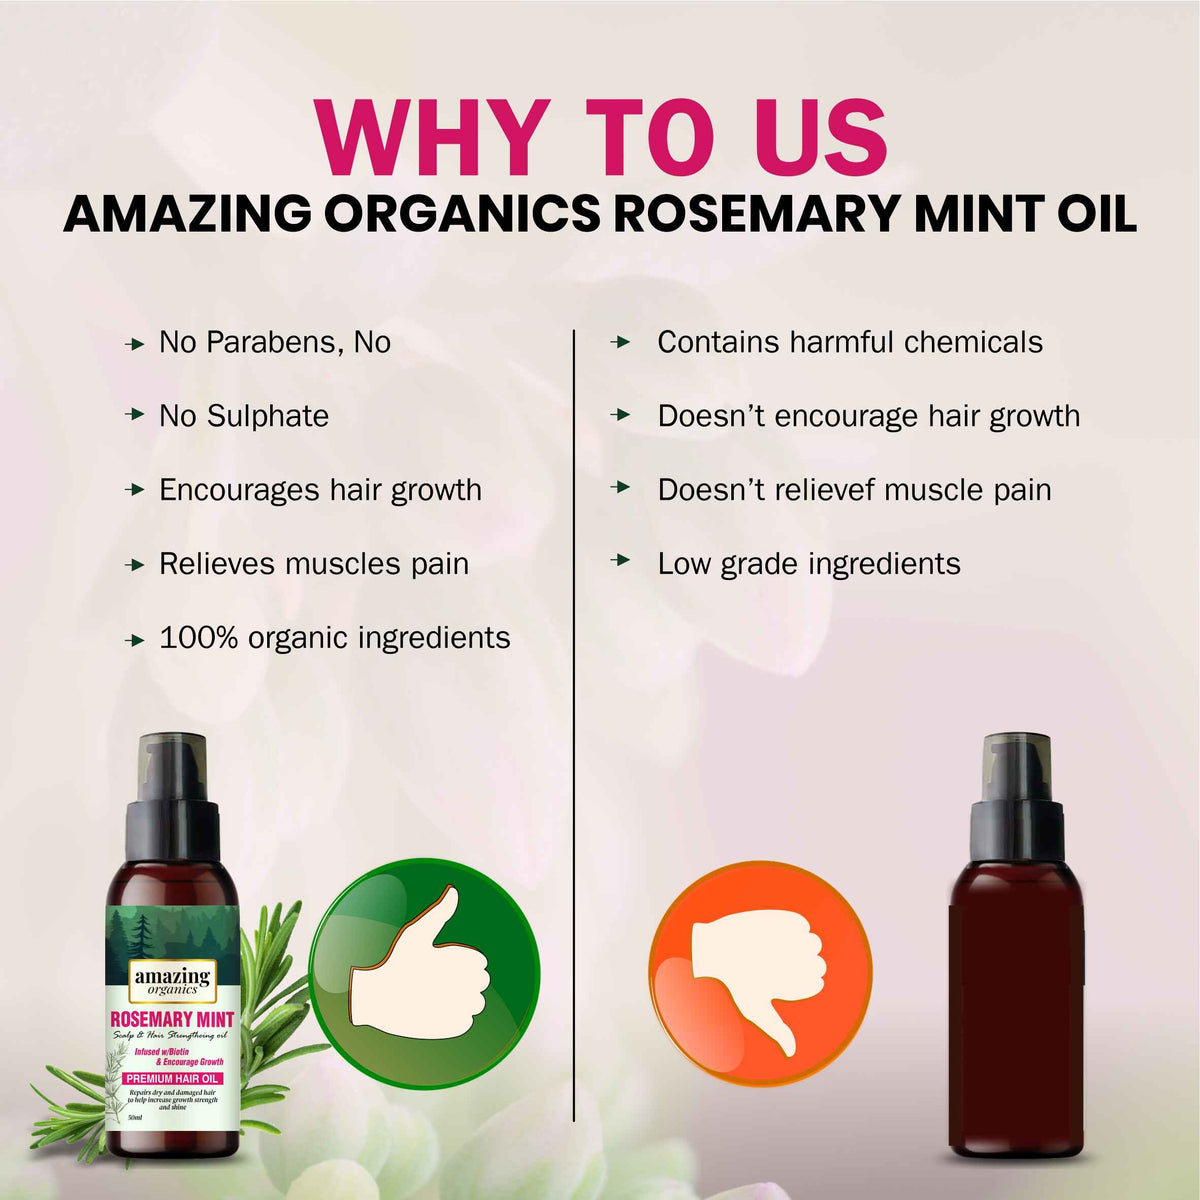 Rosemary Mint Scalp &amp; Hair Strengthening Oil with Biotin &amp; essential oils